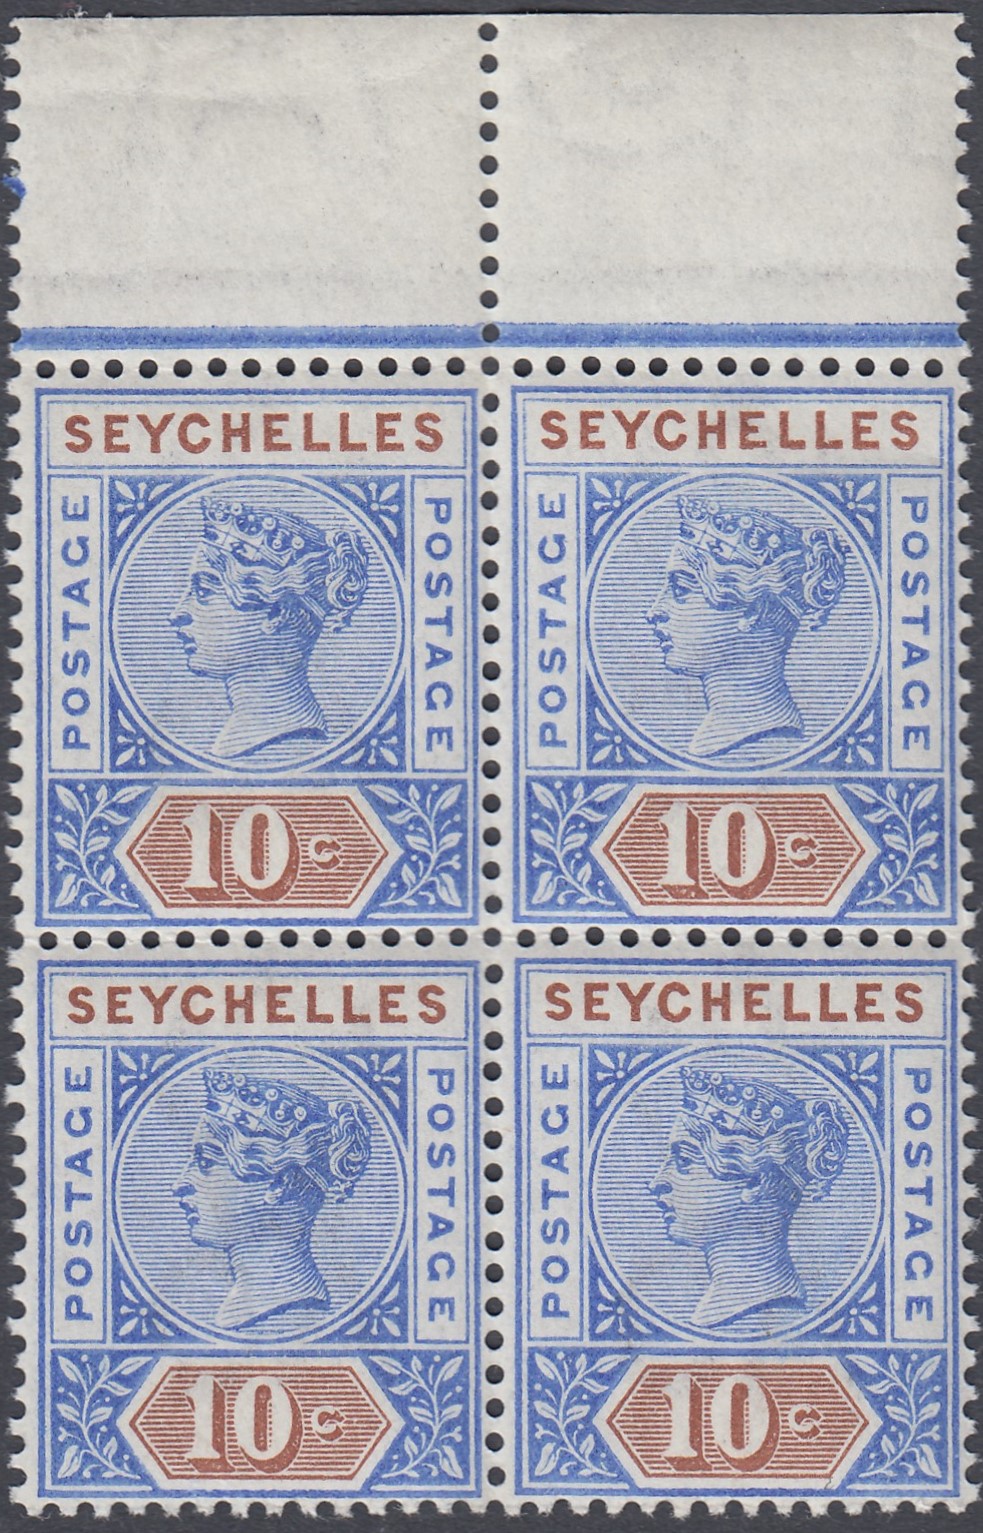 STAMPS SEYCHELLES 1892 10c Bright Ultramarine and Brown DIE I.